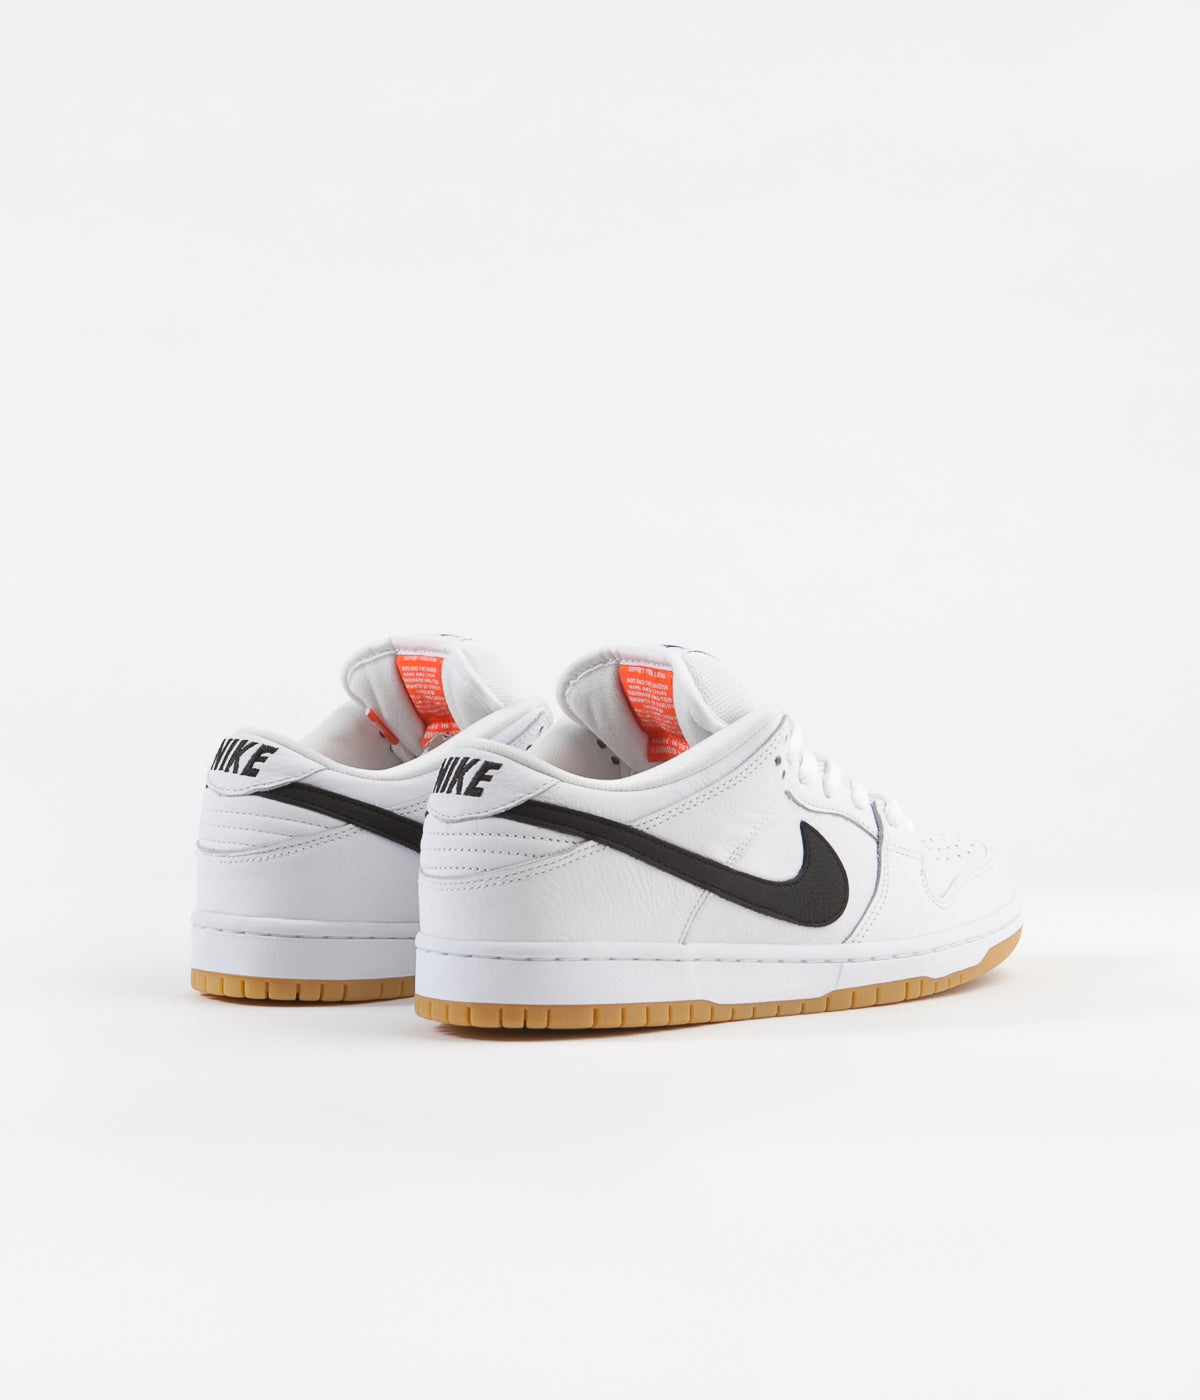 Nike Sb Orange Label Dunk Low Pro Shoes - White / Black - Gum | Flatspot